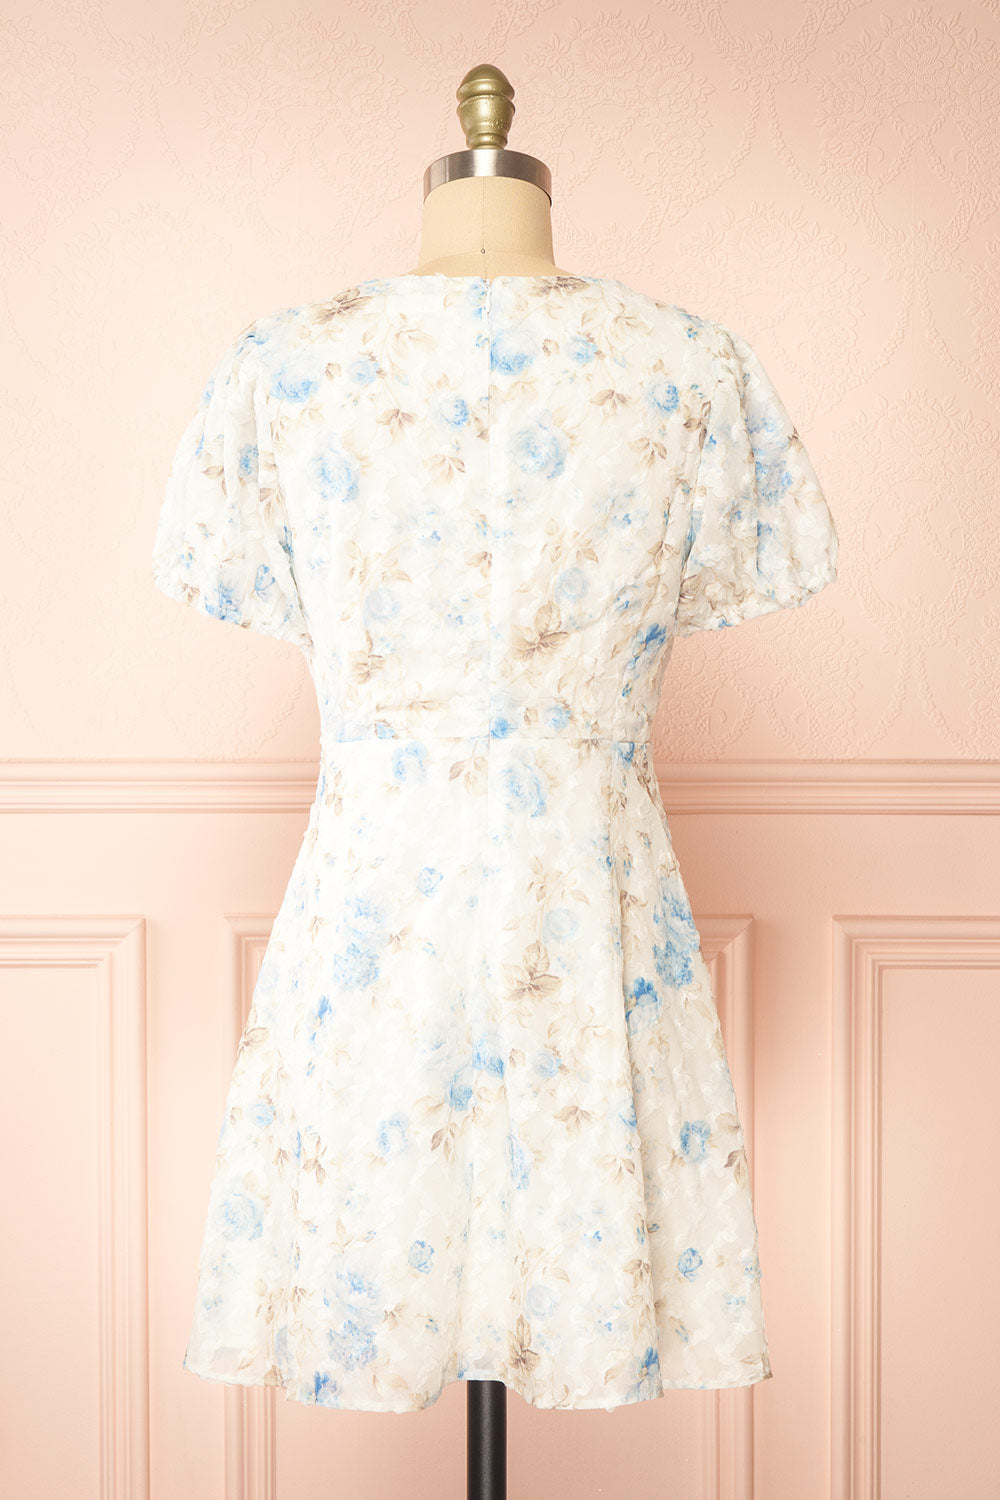 Sykos Short White Floral Chiffon Dress | Boutique 1861 back view